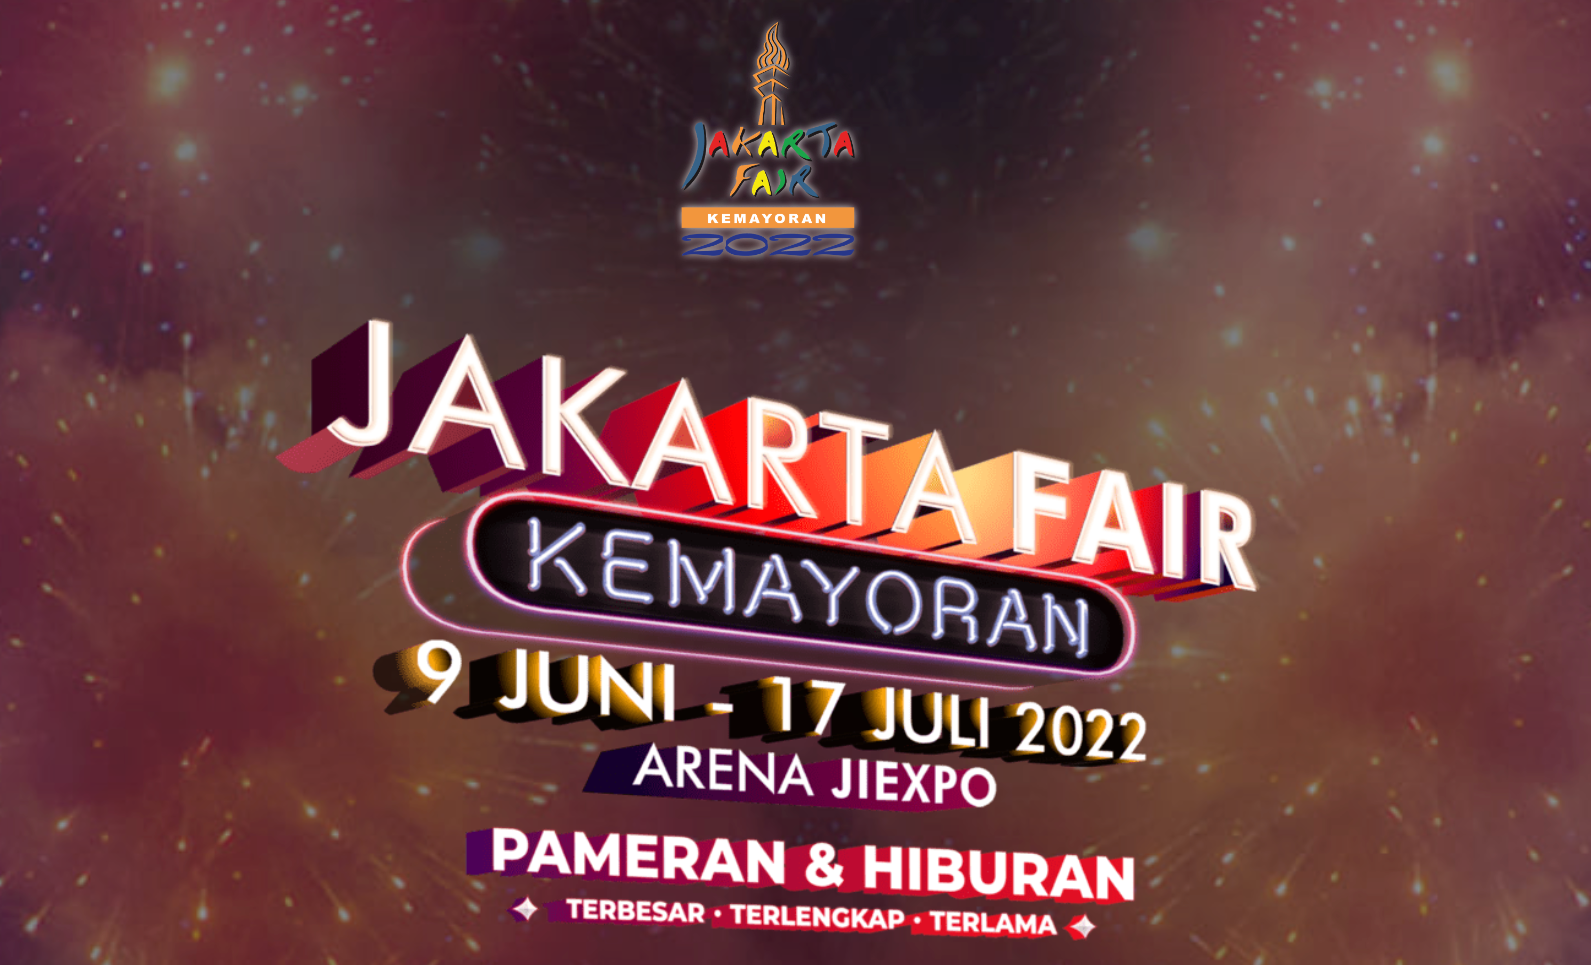 Cara Beli Tiket Online Jakarta Fair Kemayoran 2022